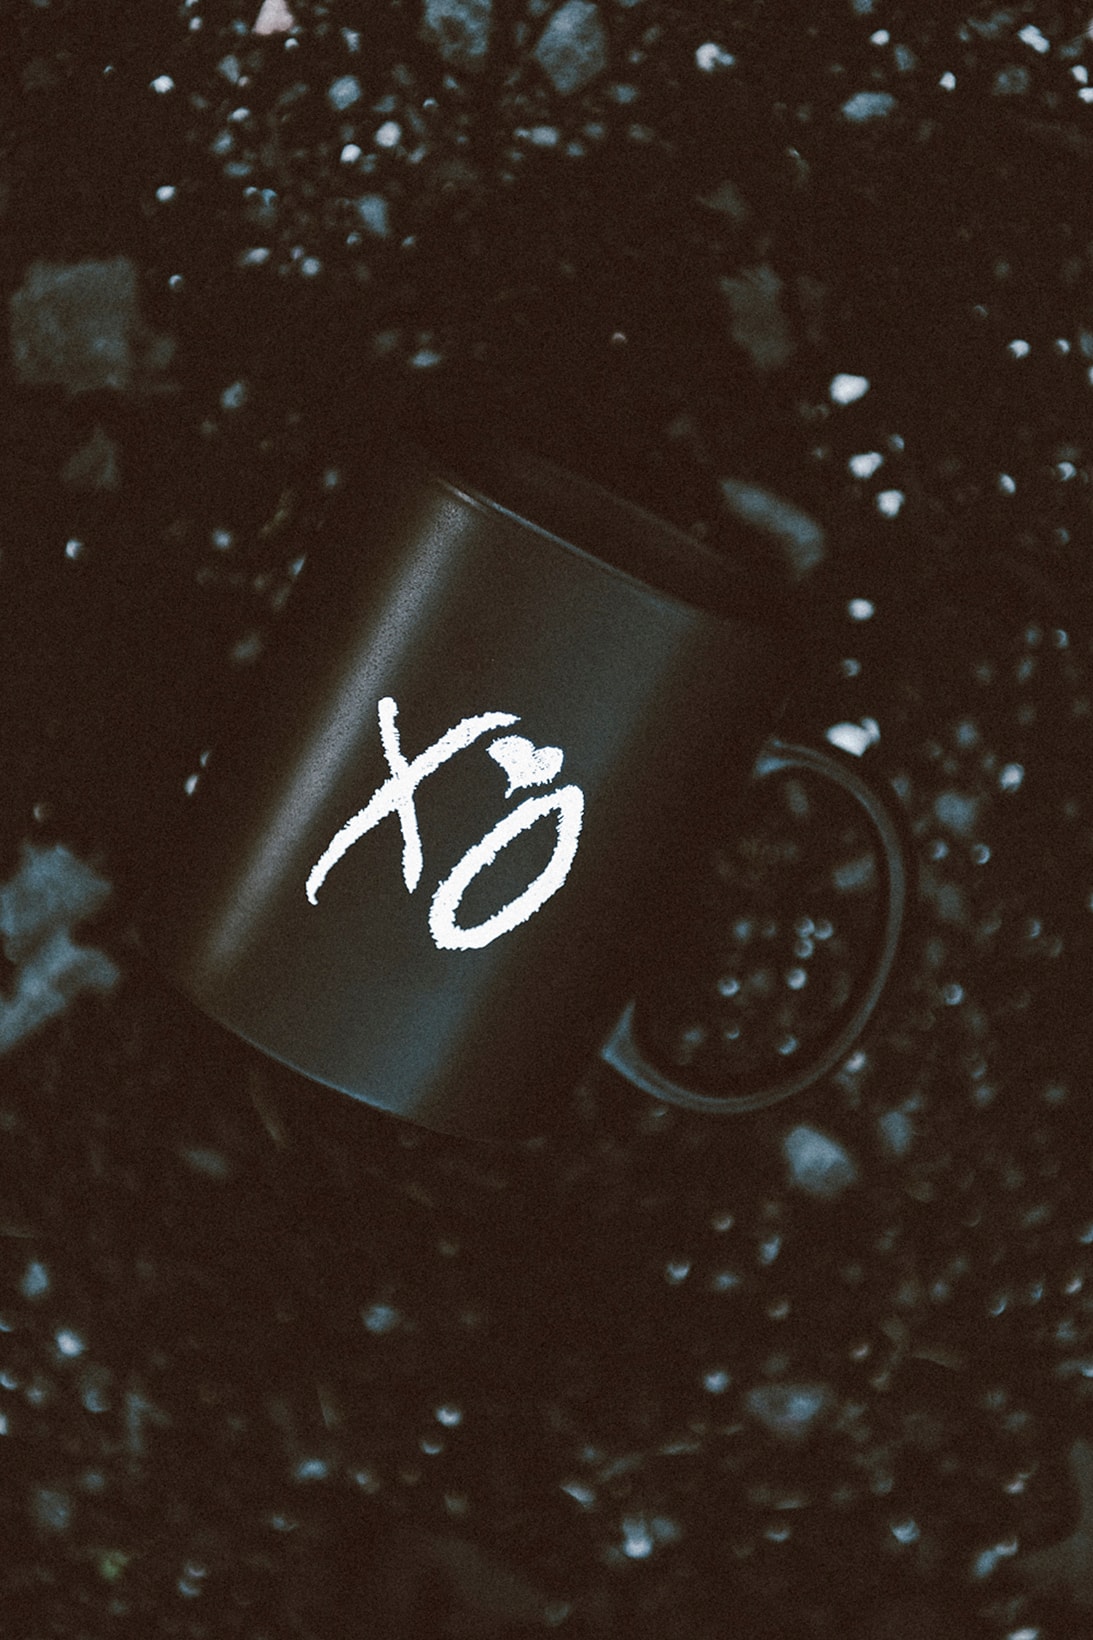 The Weeknd 2018 Release 002 XO june date info drop coffee mug basketball jersey pique polo basketball shorts slide sandals tee shirts hats tracksuit